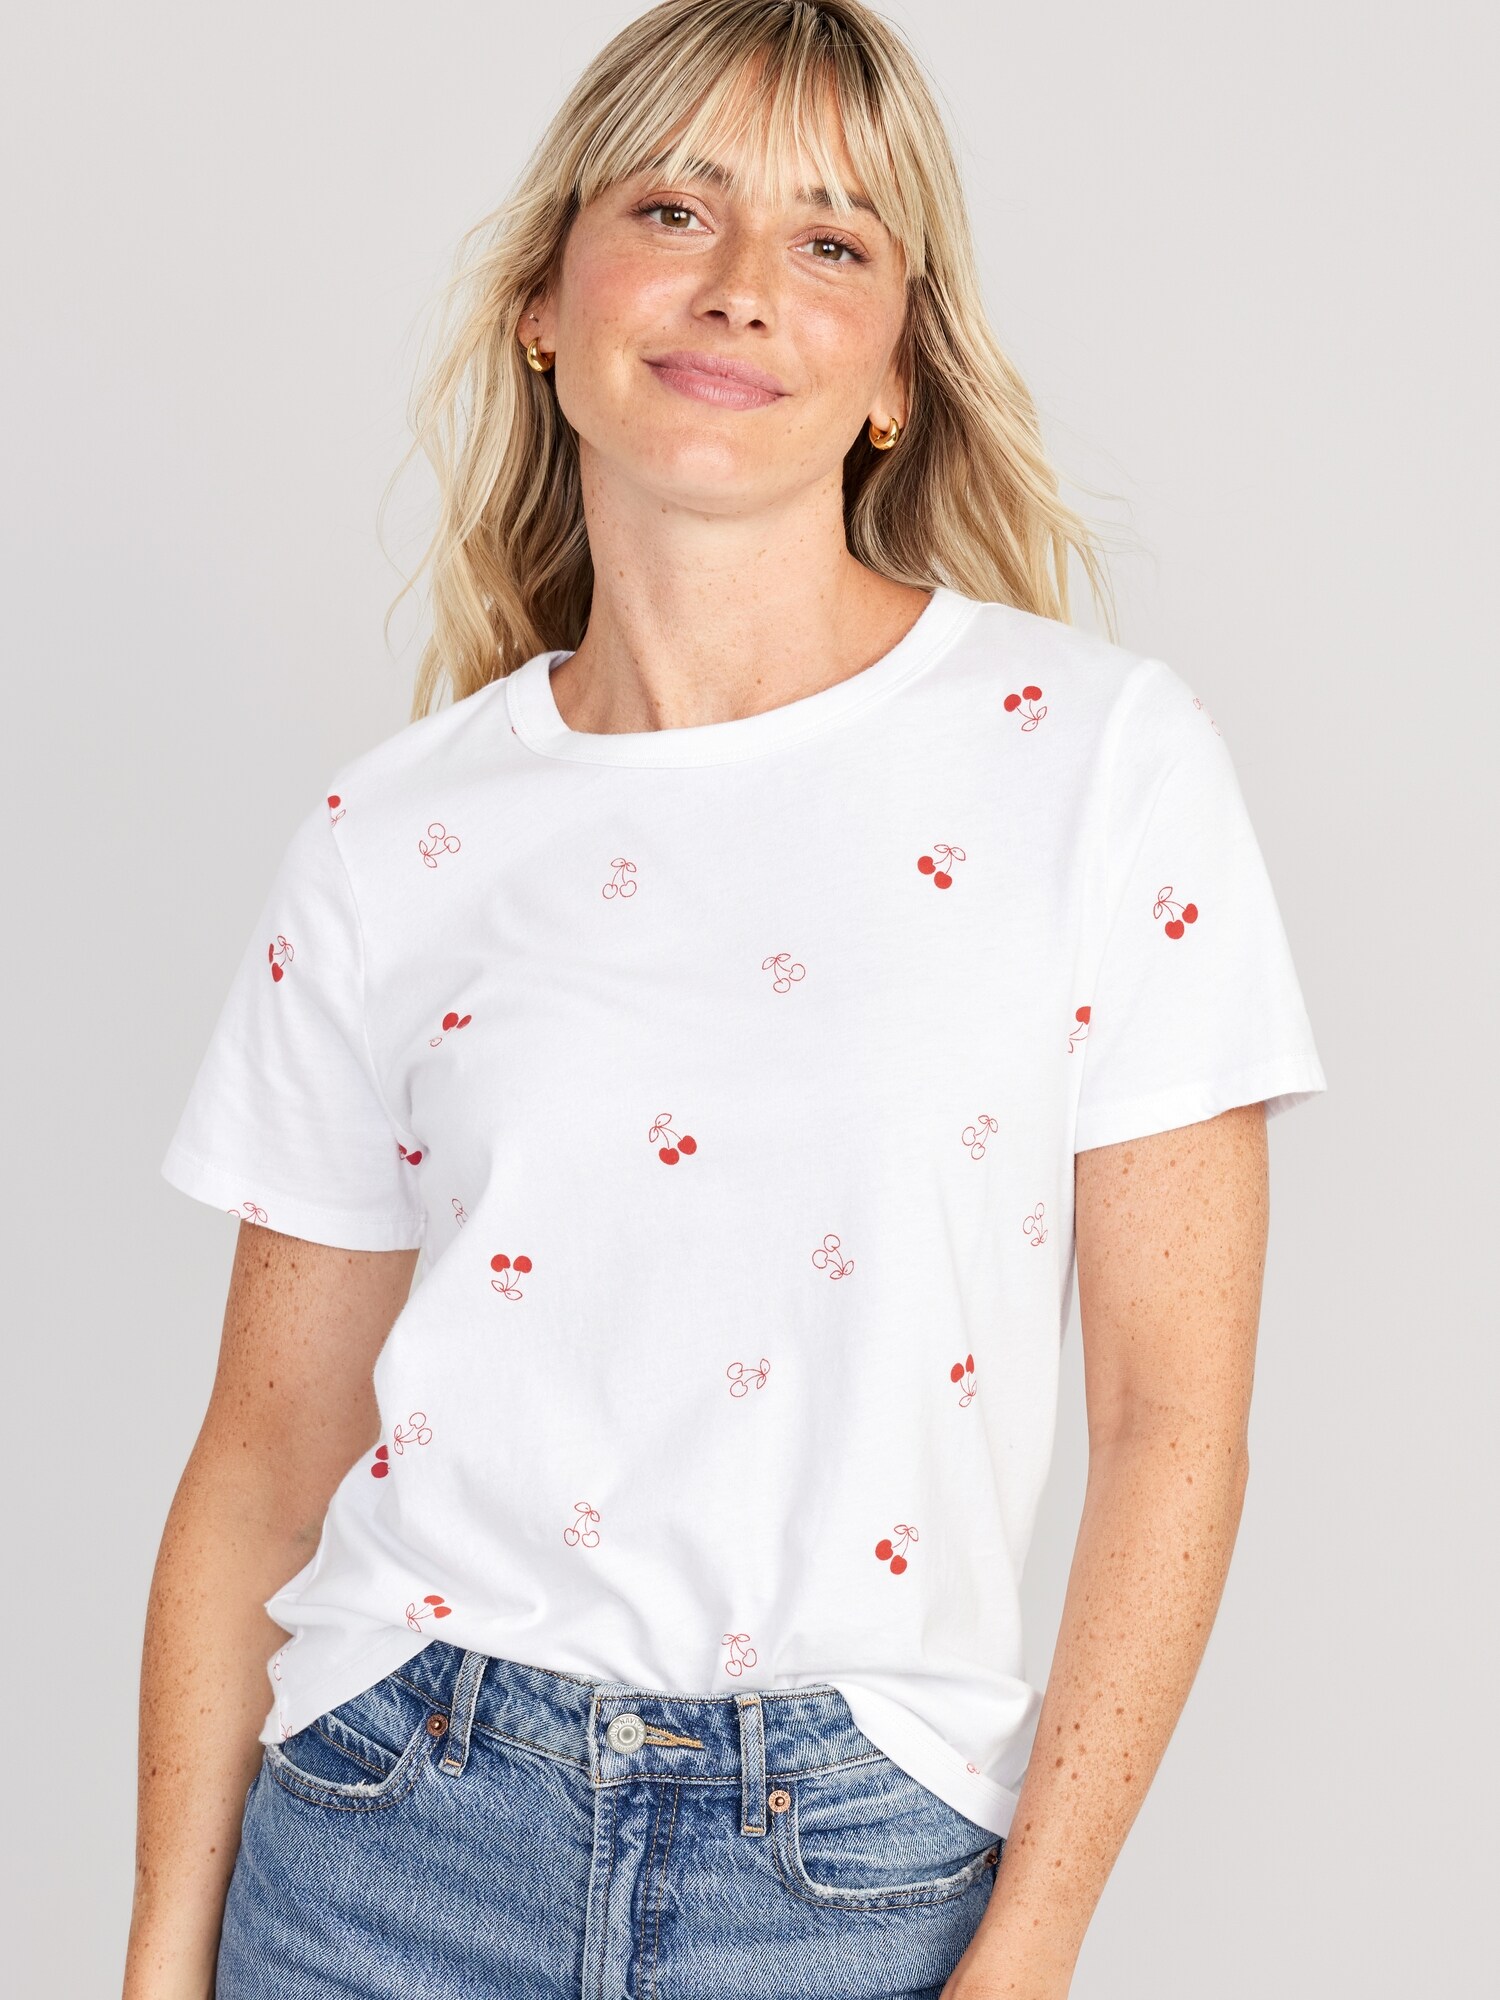 EveryWear Crew-Neck Printed T-Shirt for Women